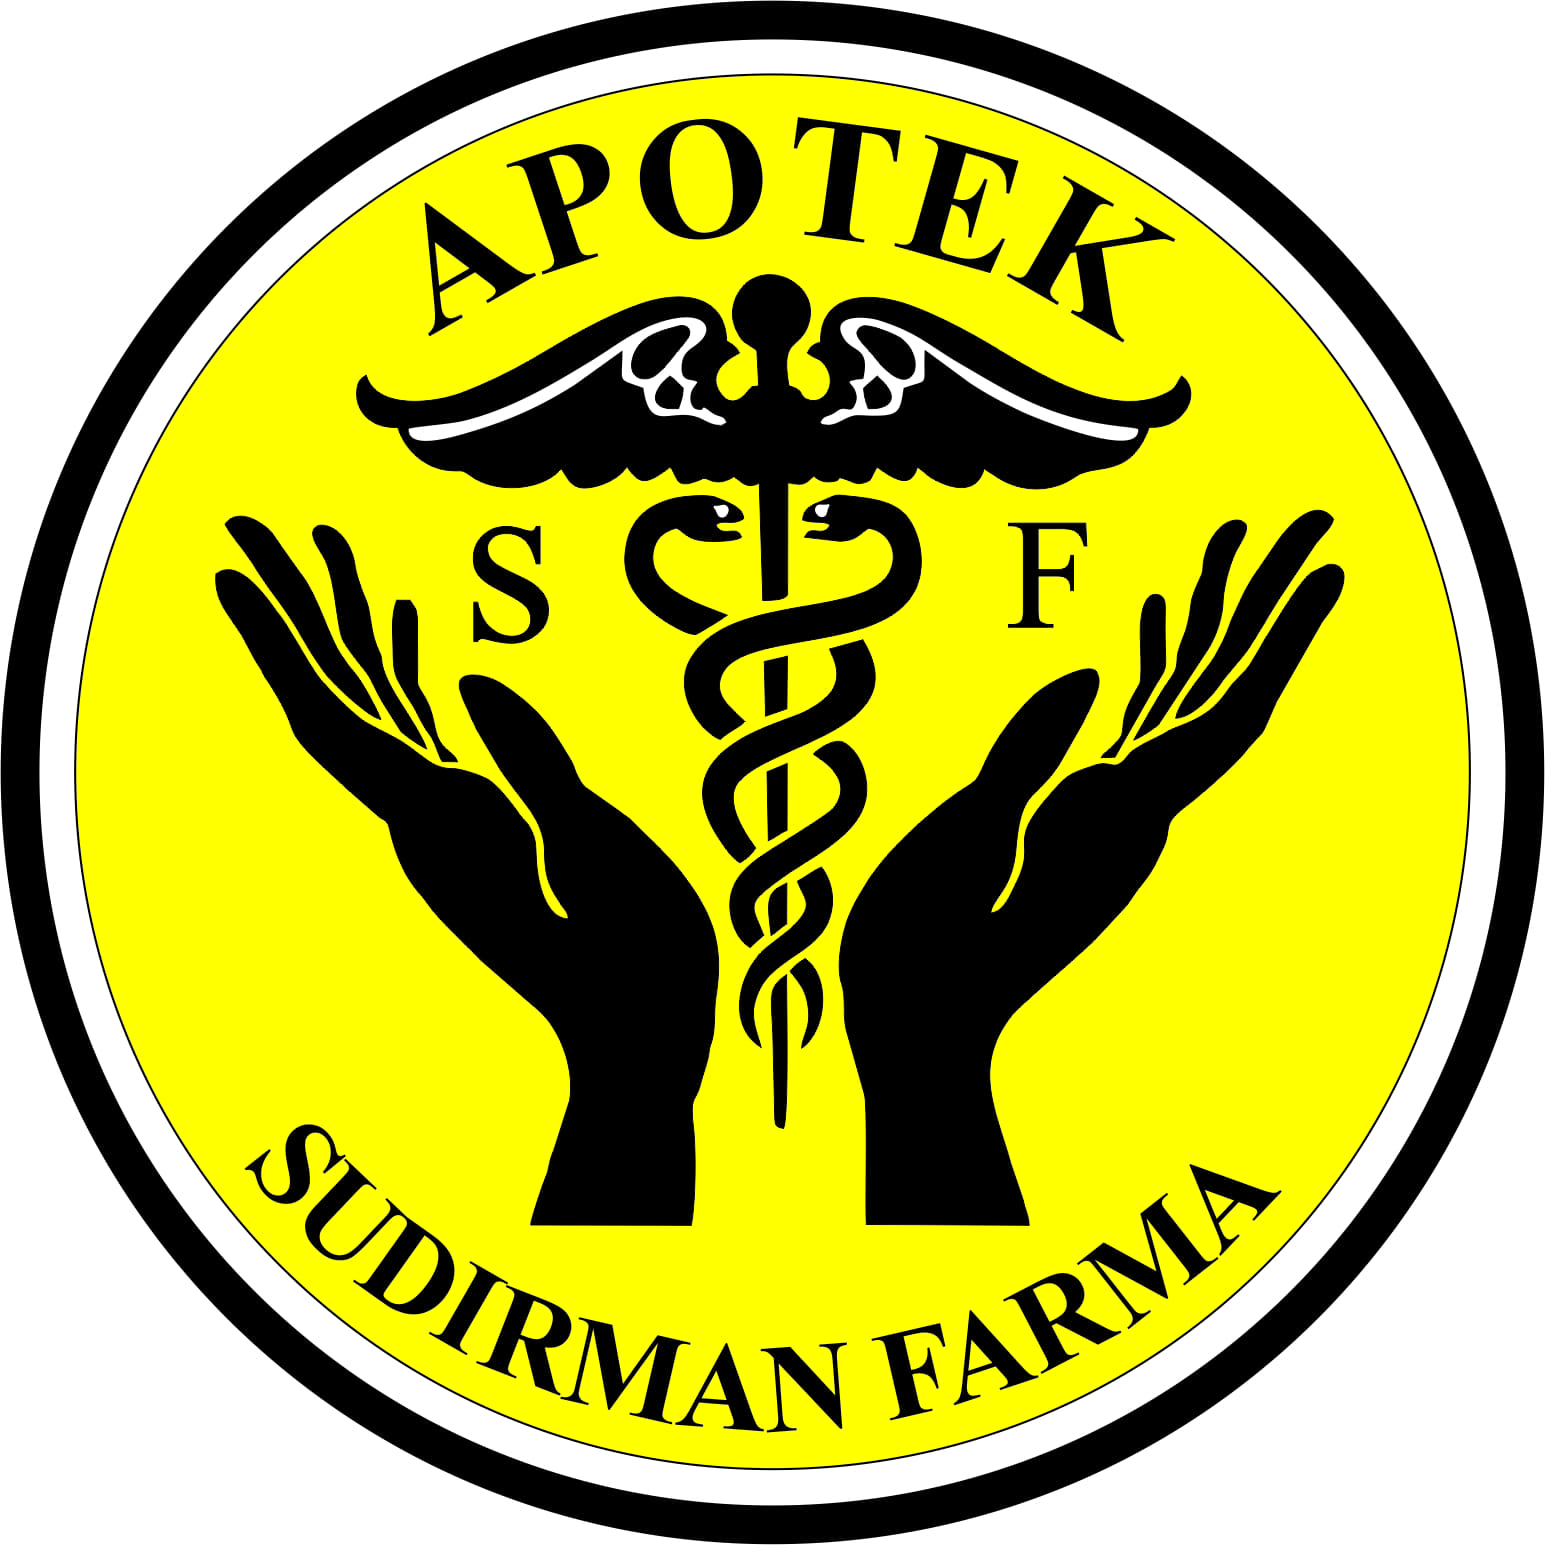 Apotek Sudirman Farma